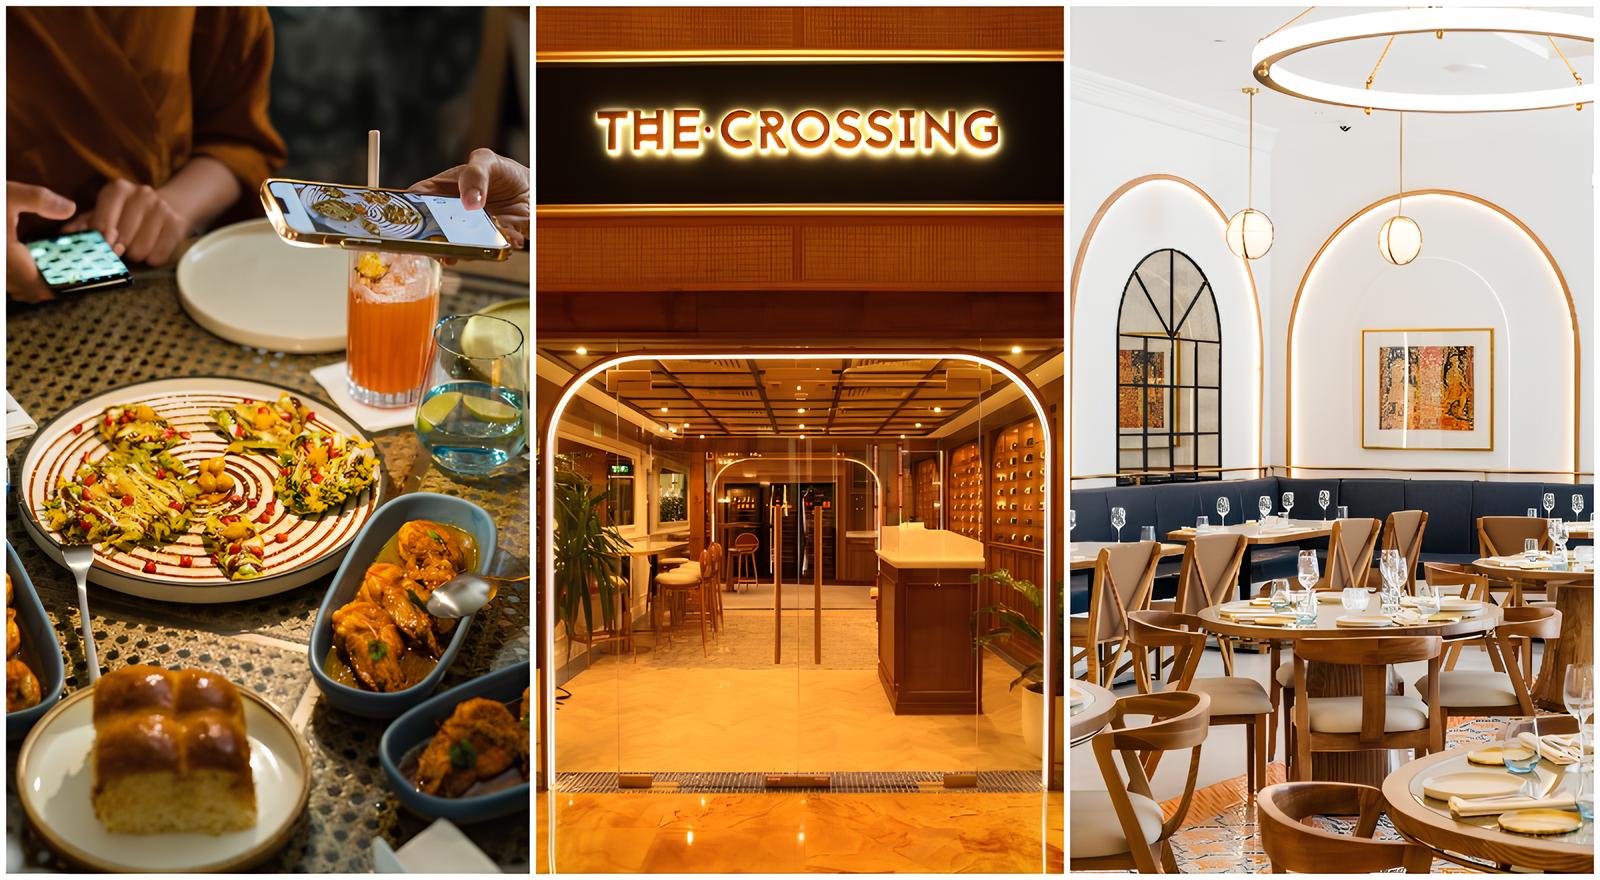 The Crossing Restaurant Dubai